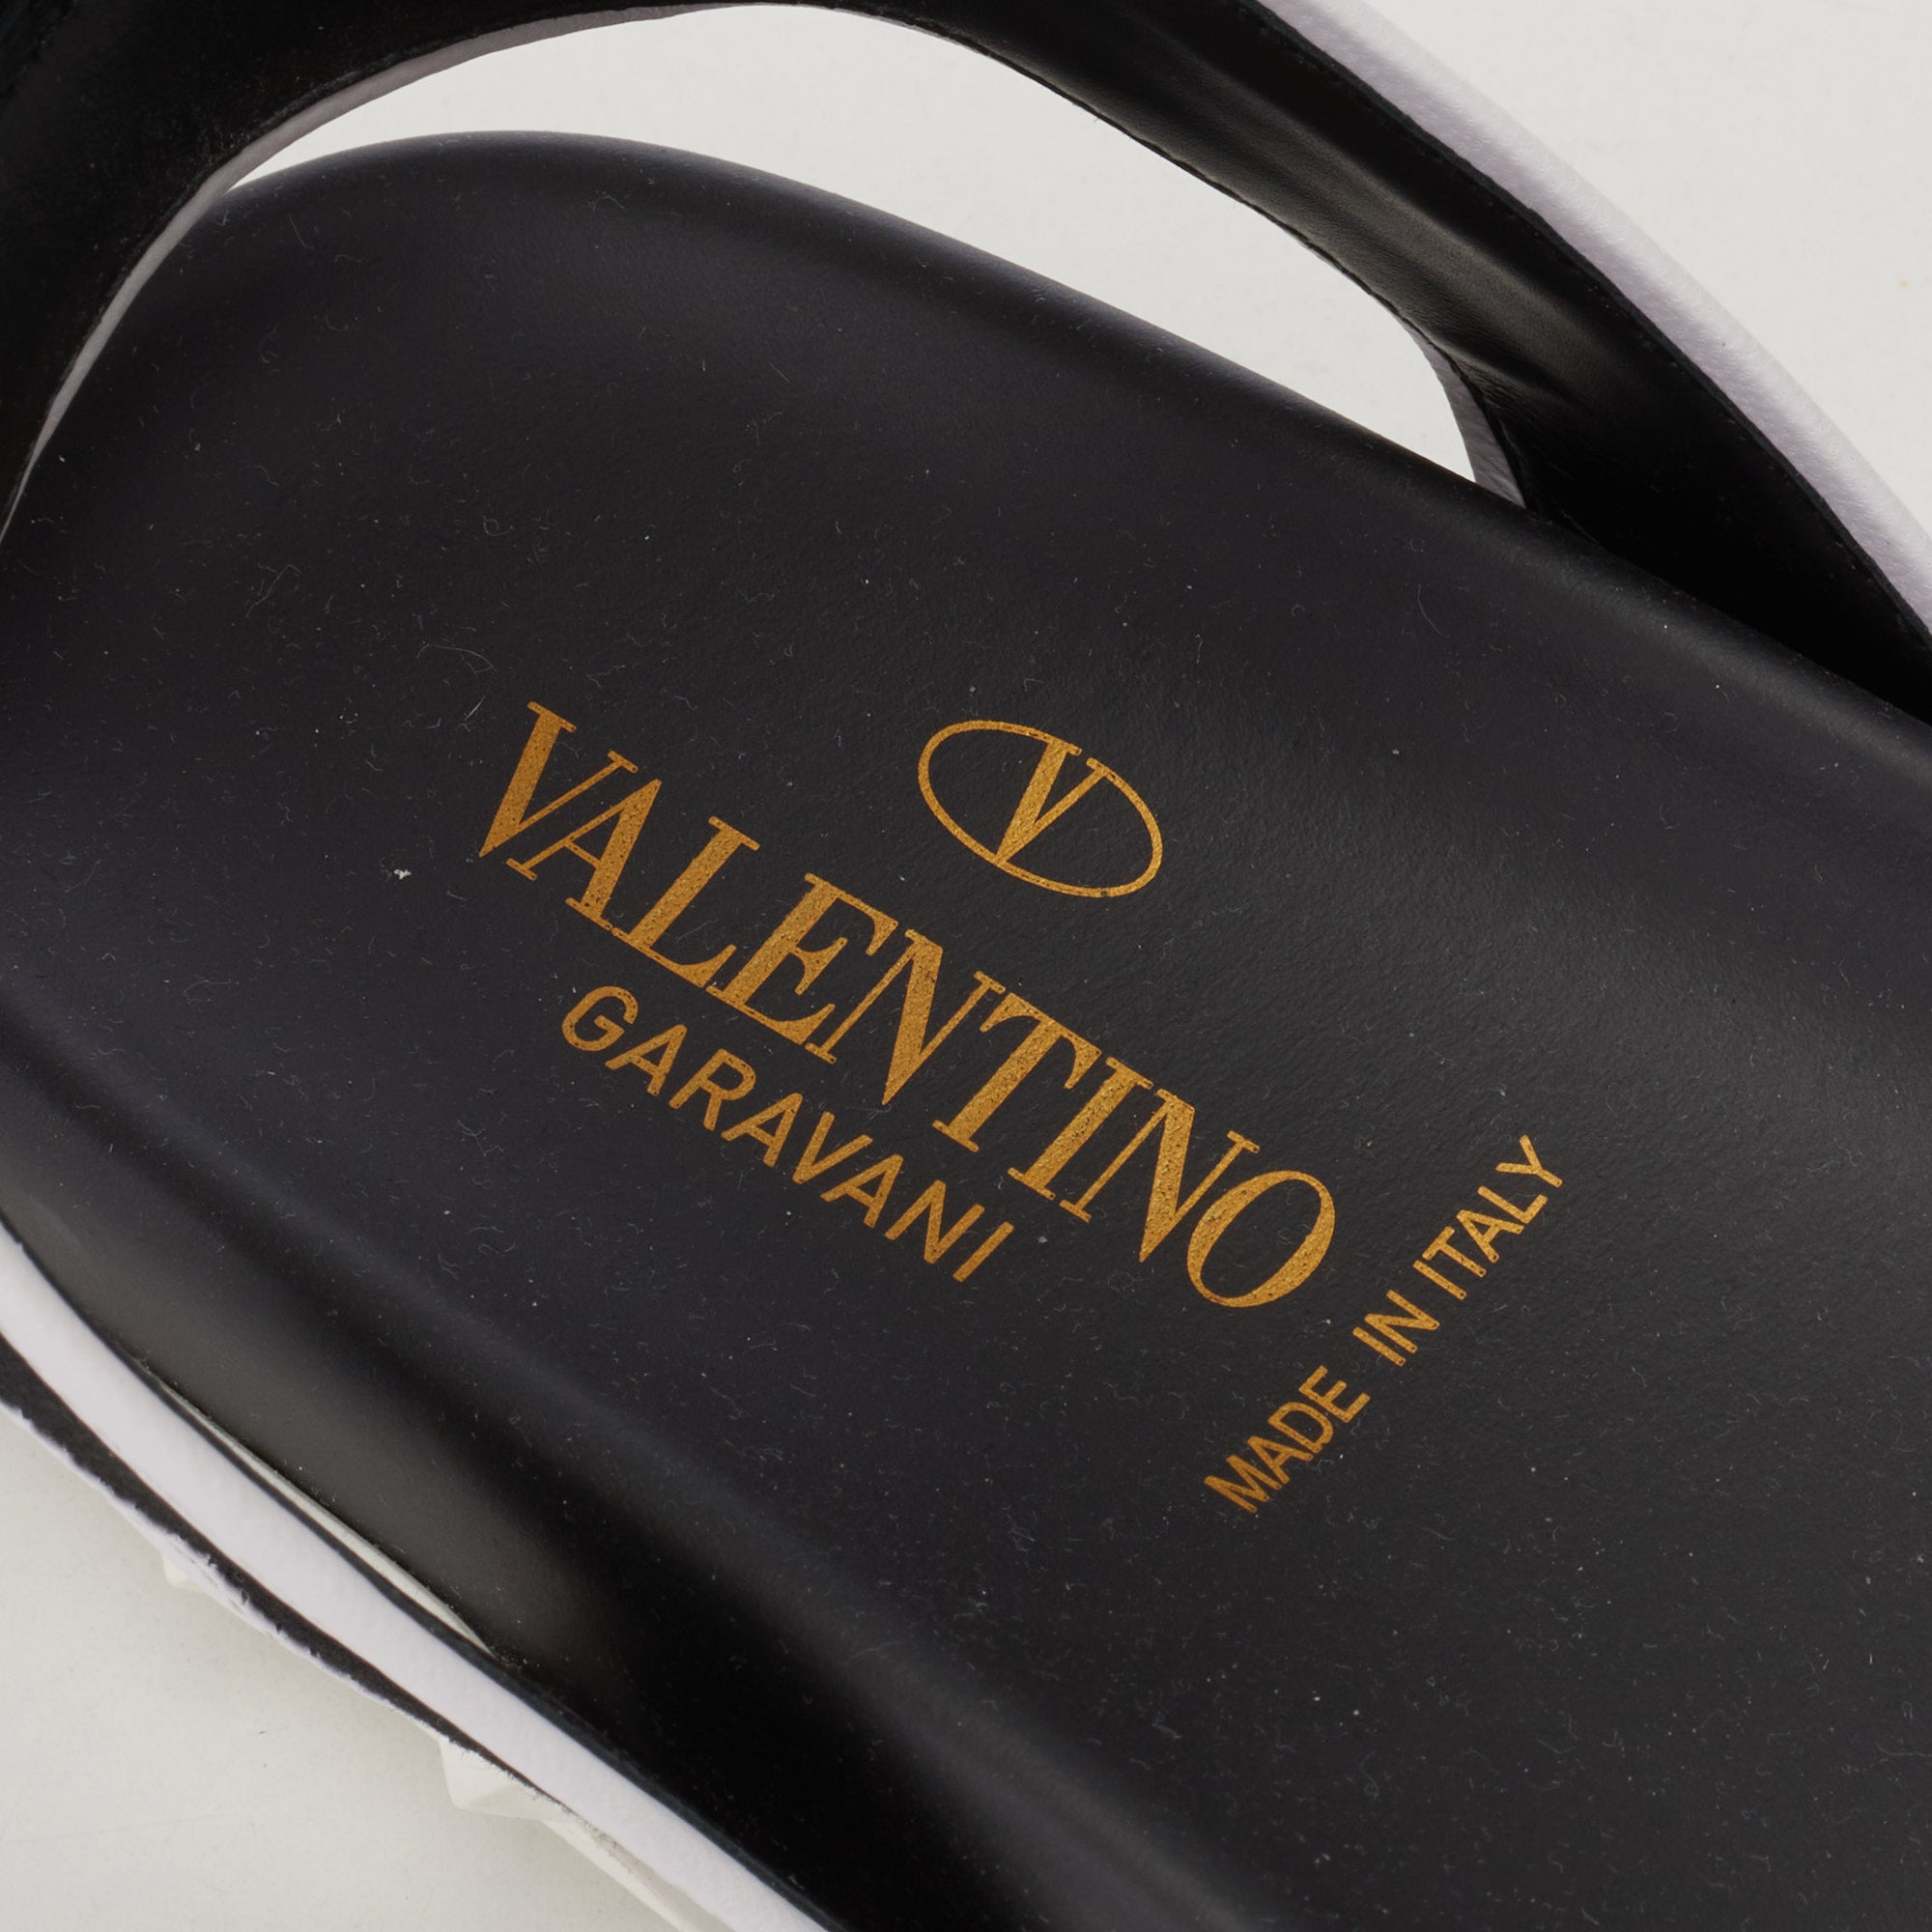 VALENTINO Garavani Black-White Stud Flat Sandal EU 35.5 US 5.5 NEW with Box